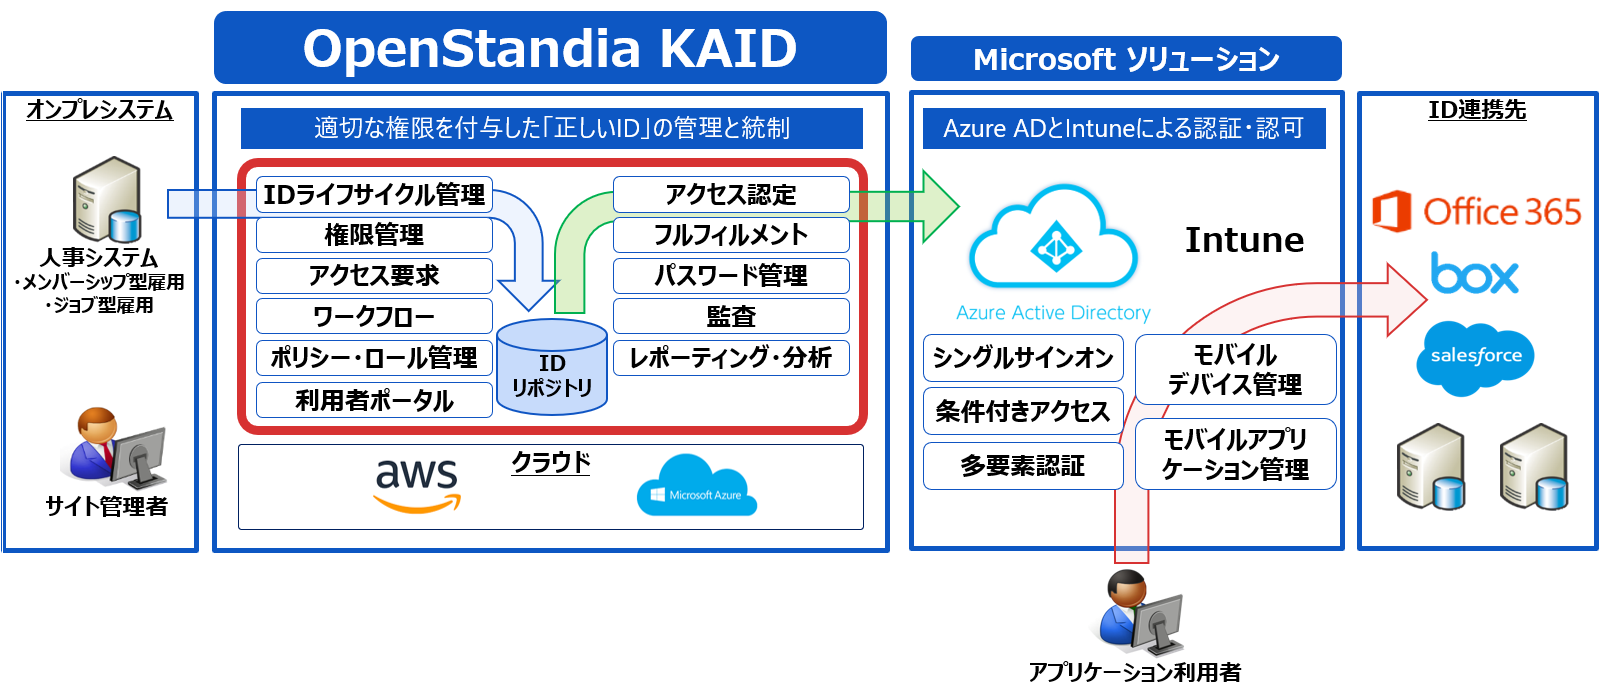 「OpenStandia KAID」とMicrosoft Azure AD、Microsoft Intuneとの連携イメージ